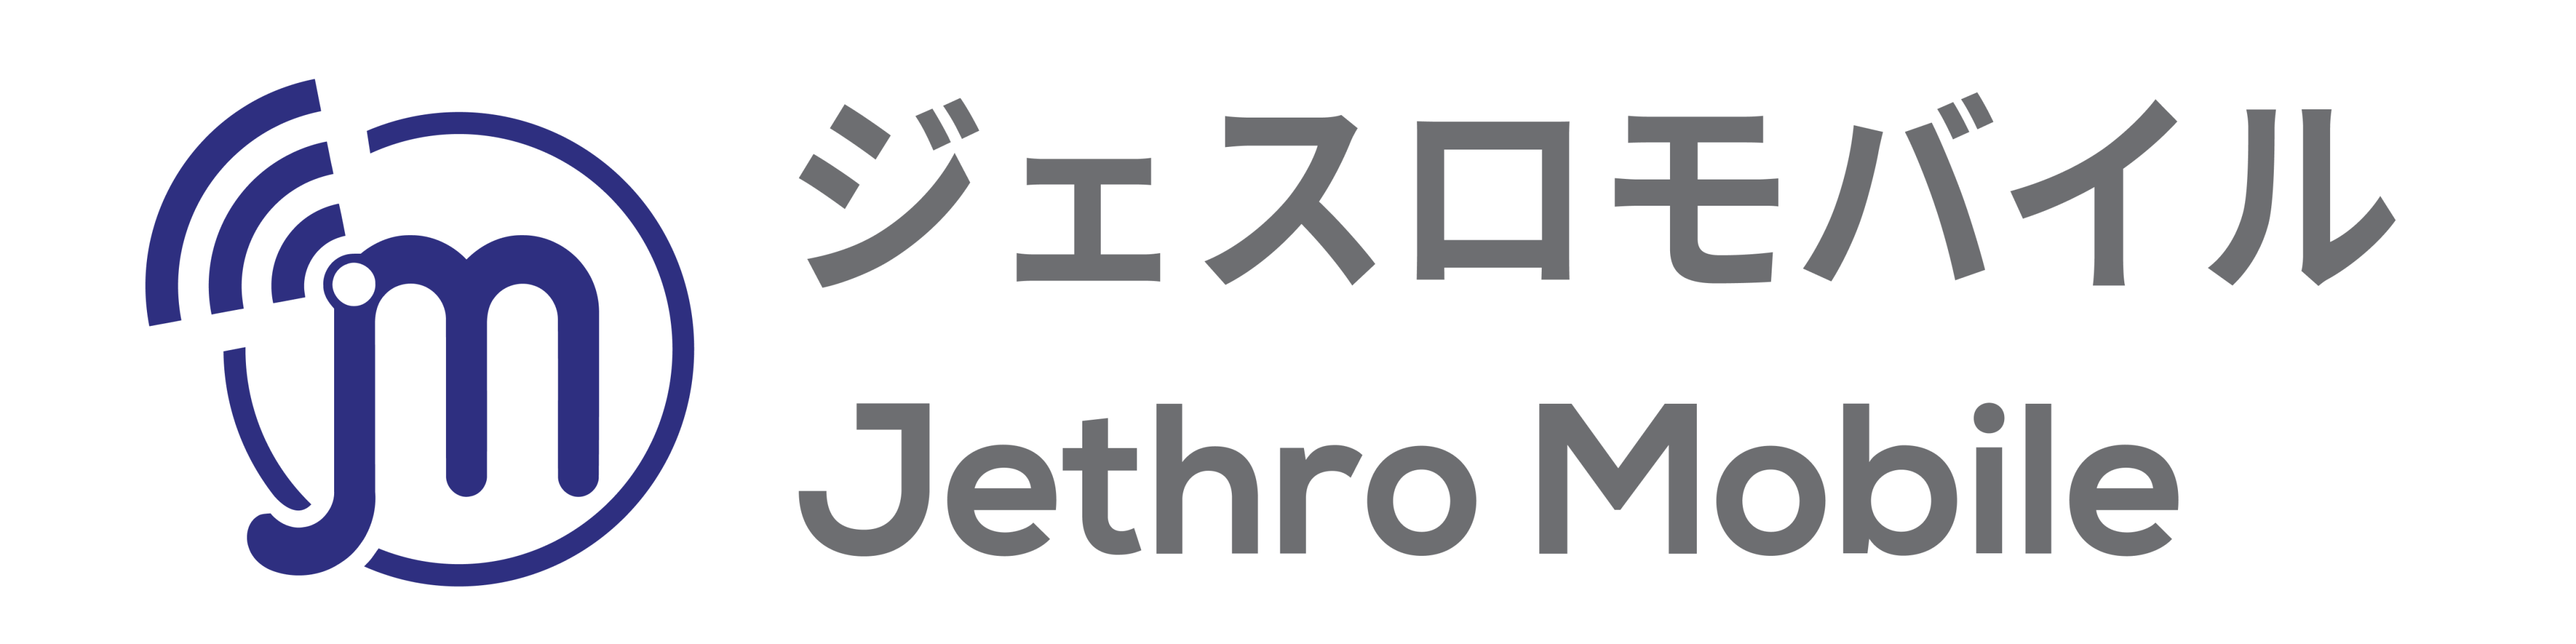 Jethro Mobile ロゴ